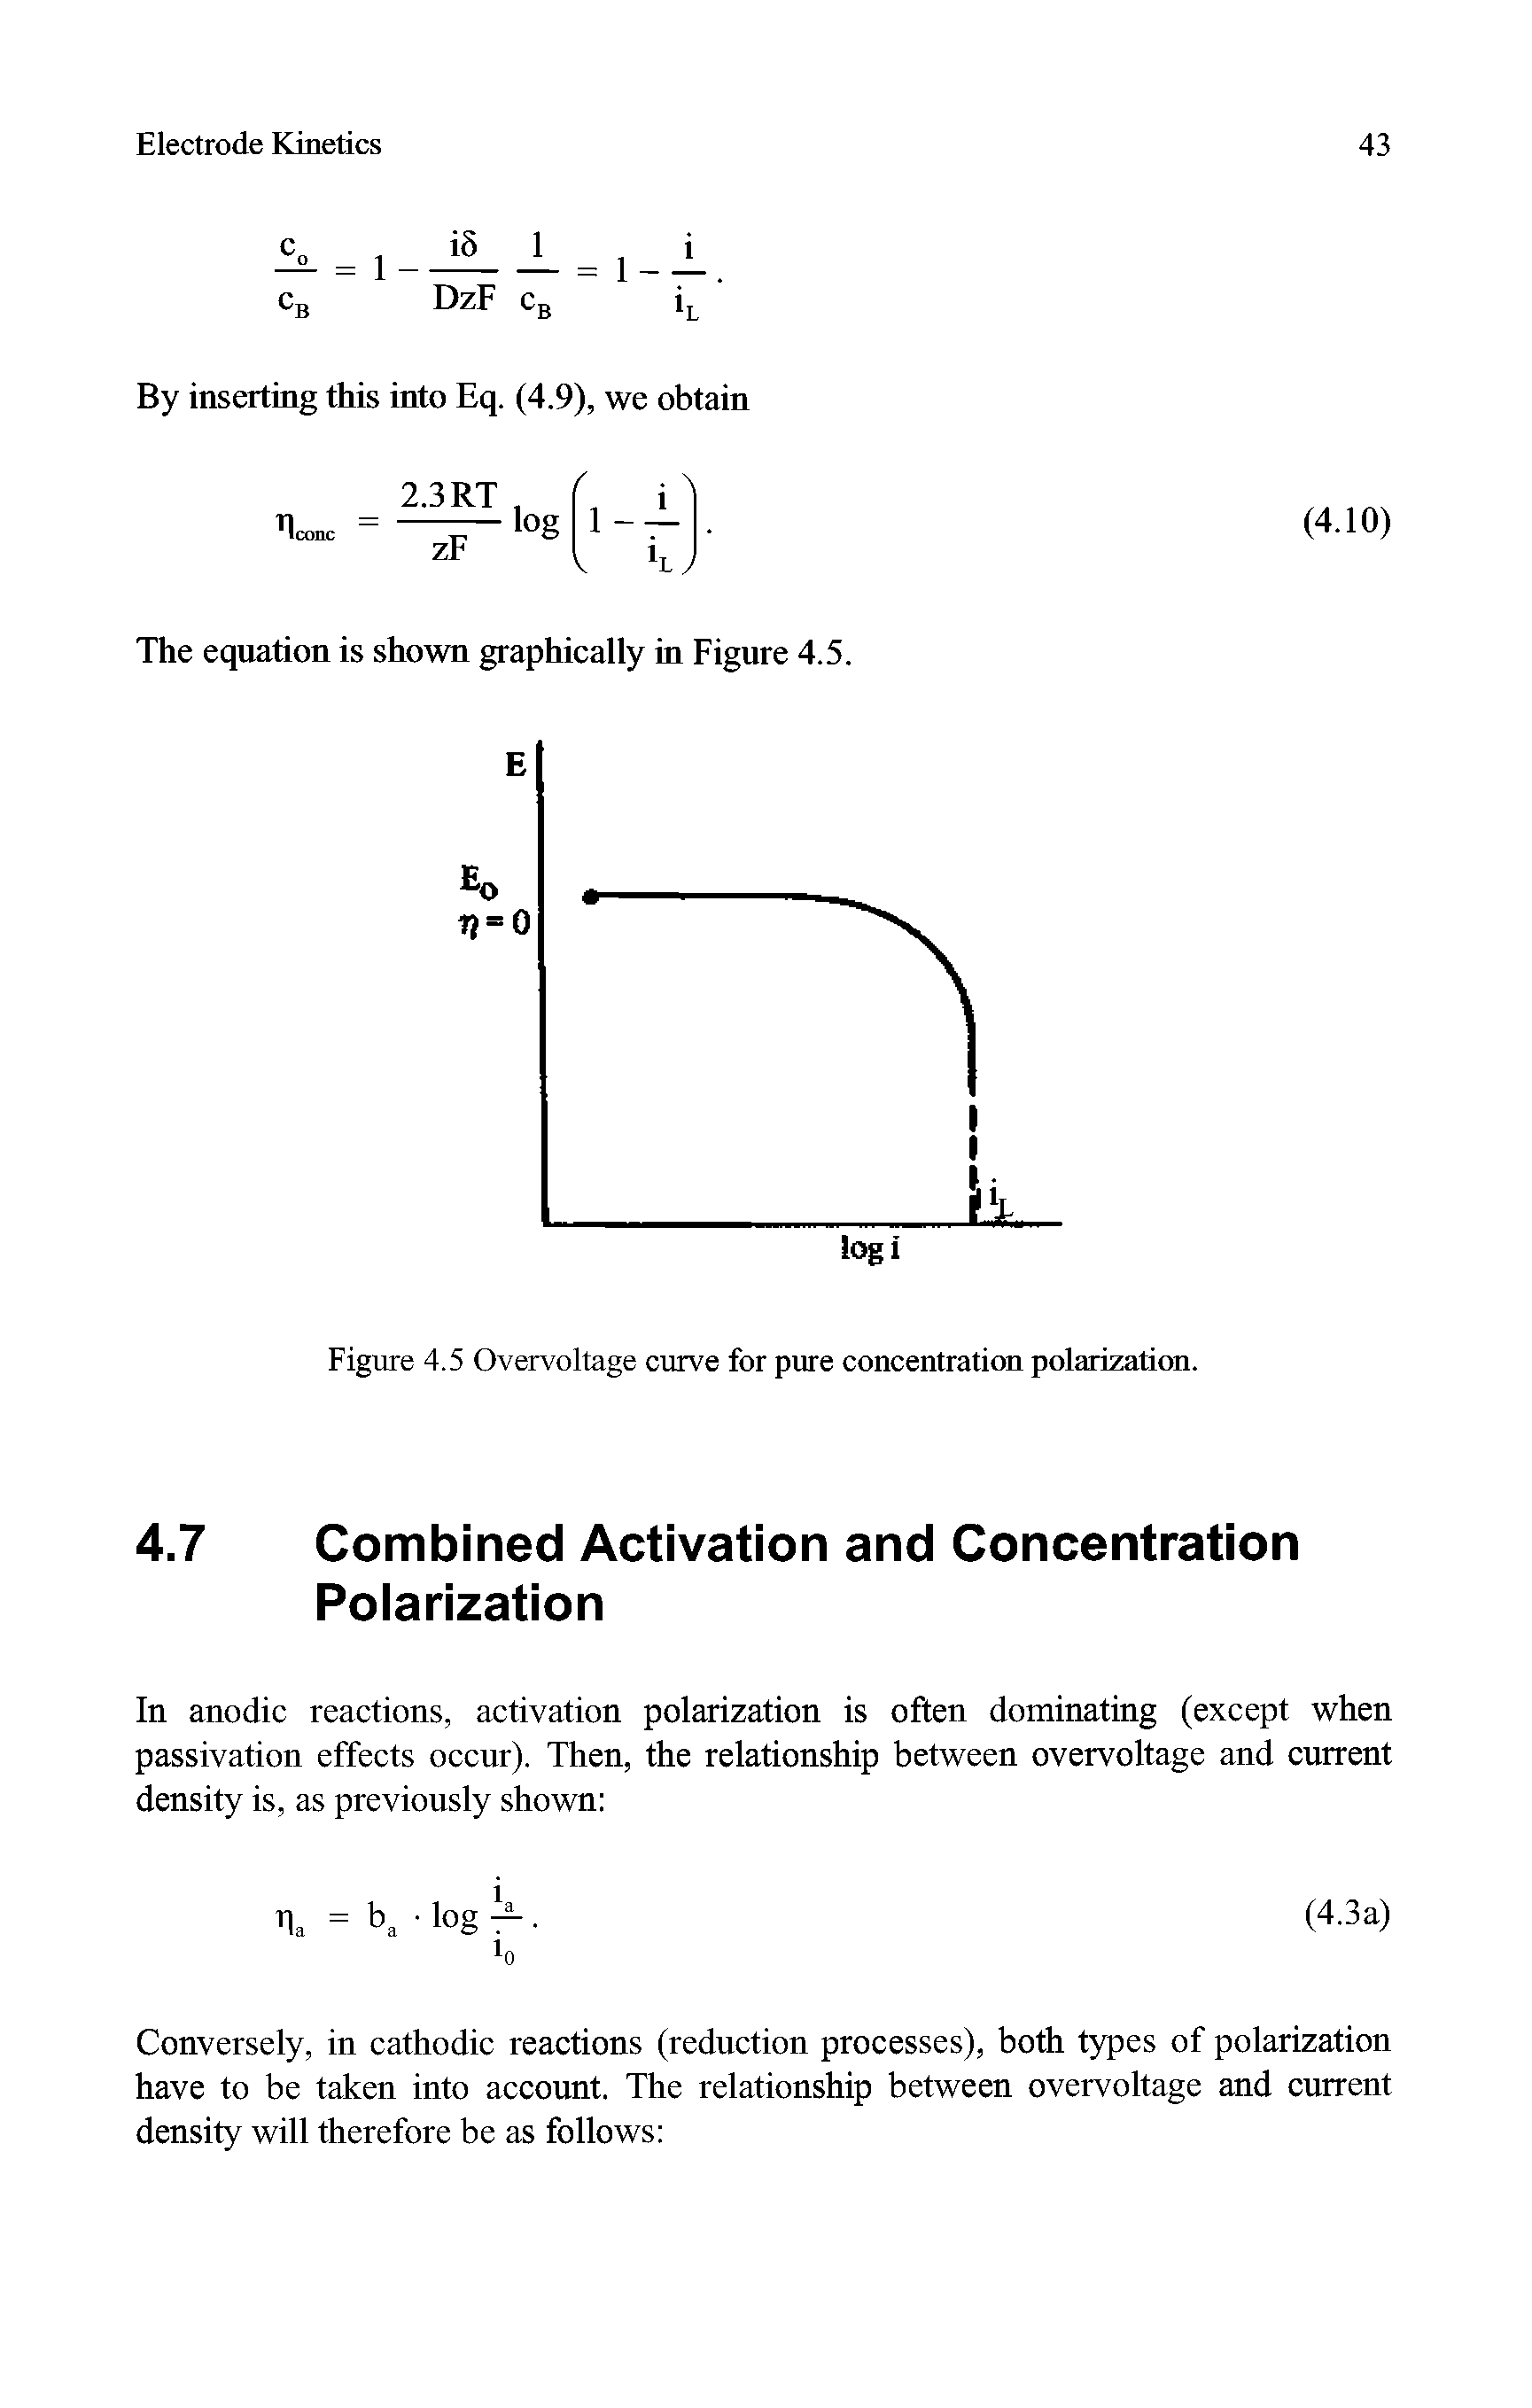 Figure 4.5 Overvoltage curve for pure concentration polarization.